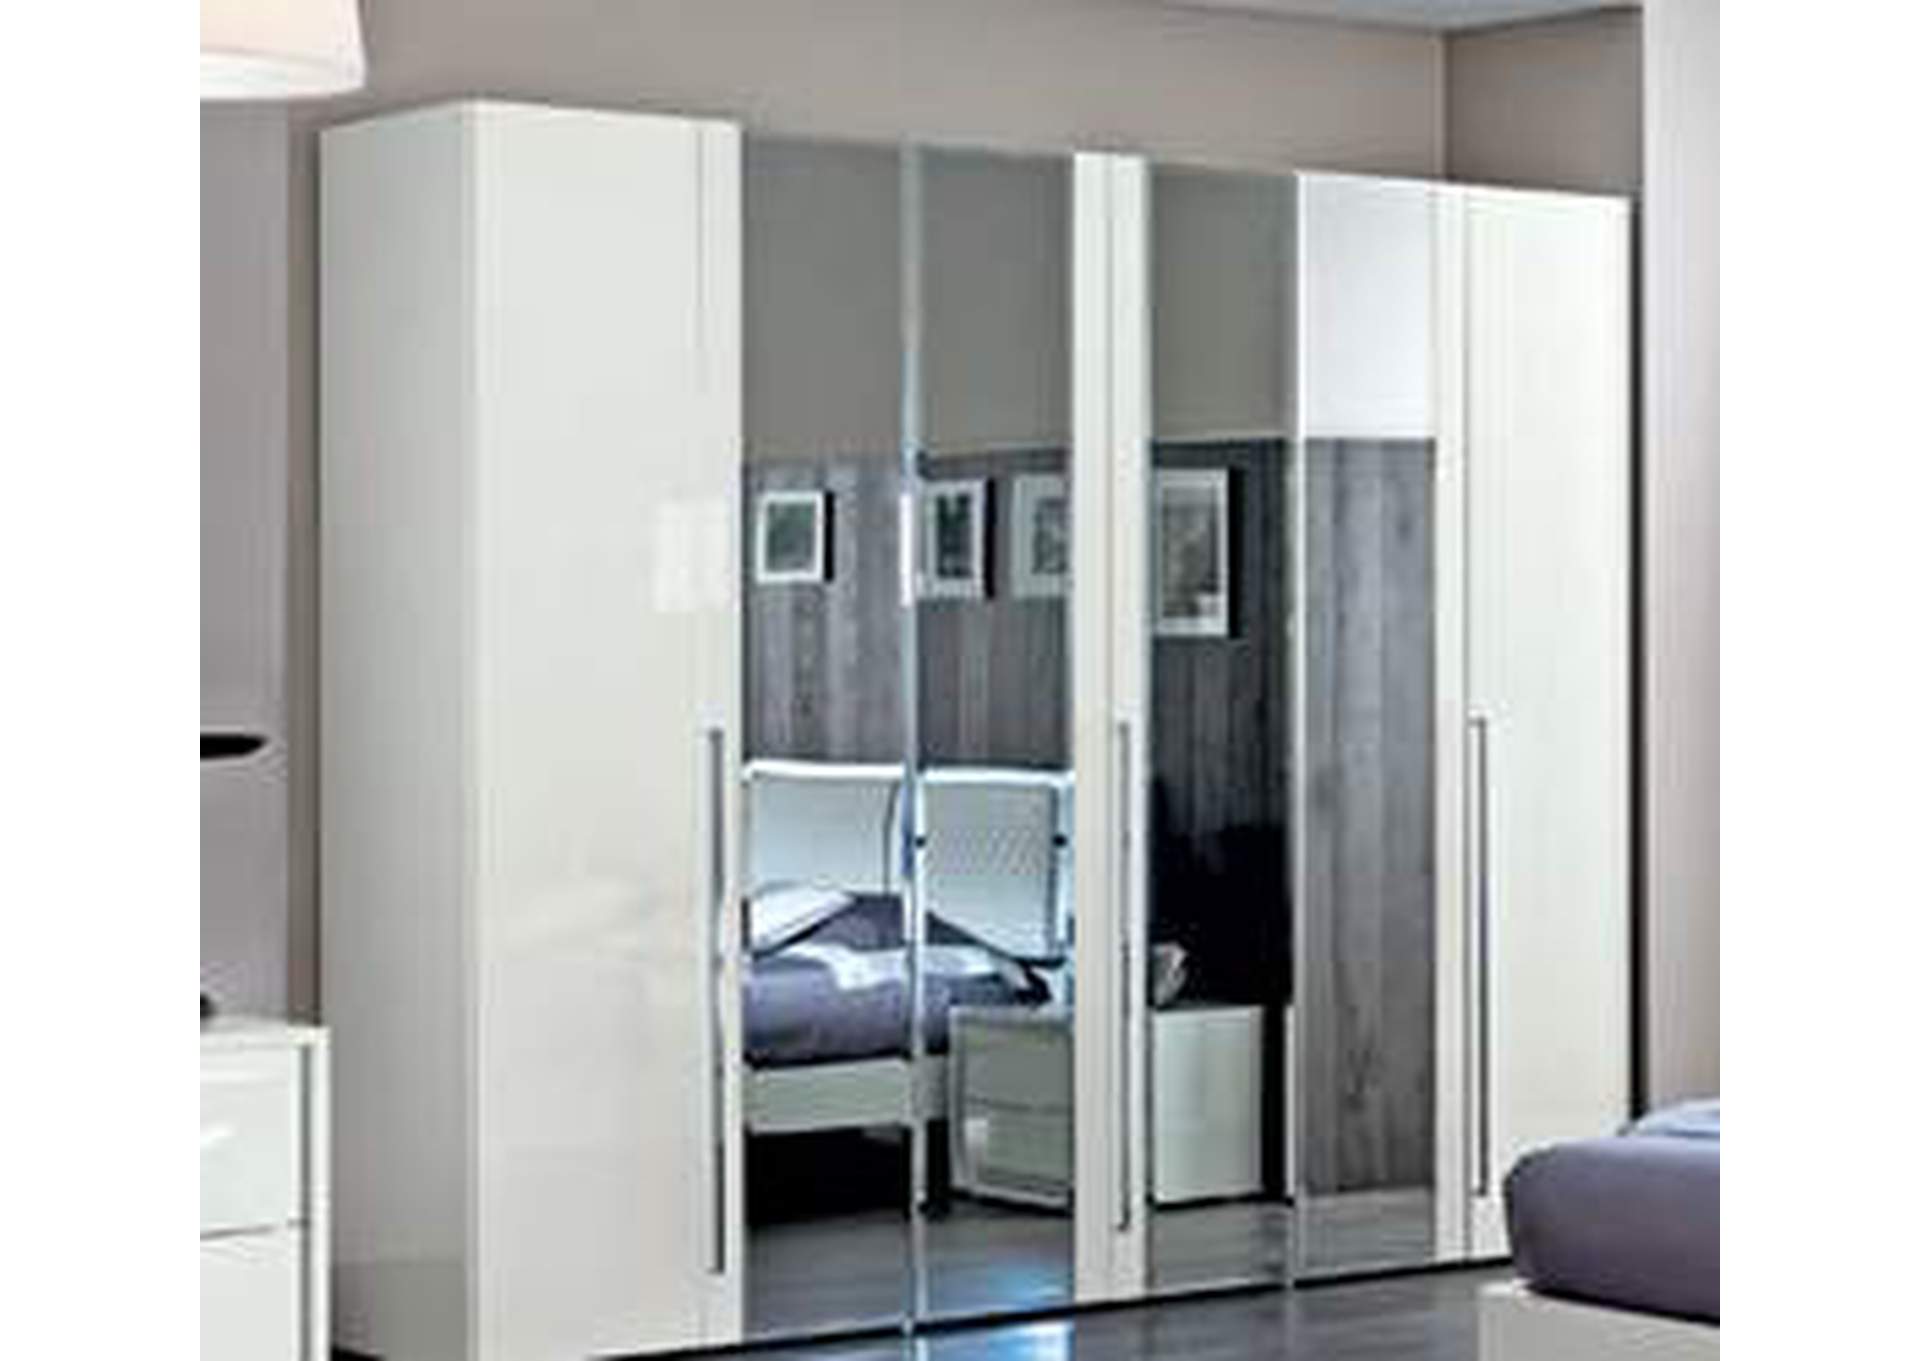 Dama Bianca 4 Doors Wardrobe with 2 Mirrors,ESF Wholesale Furniture